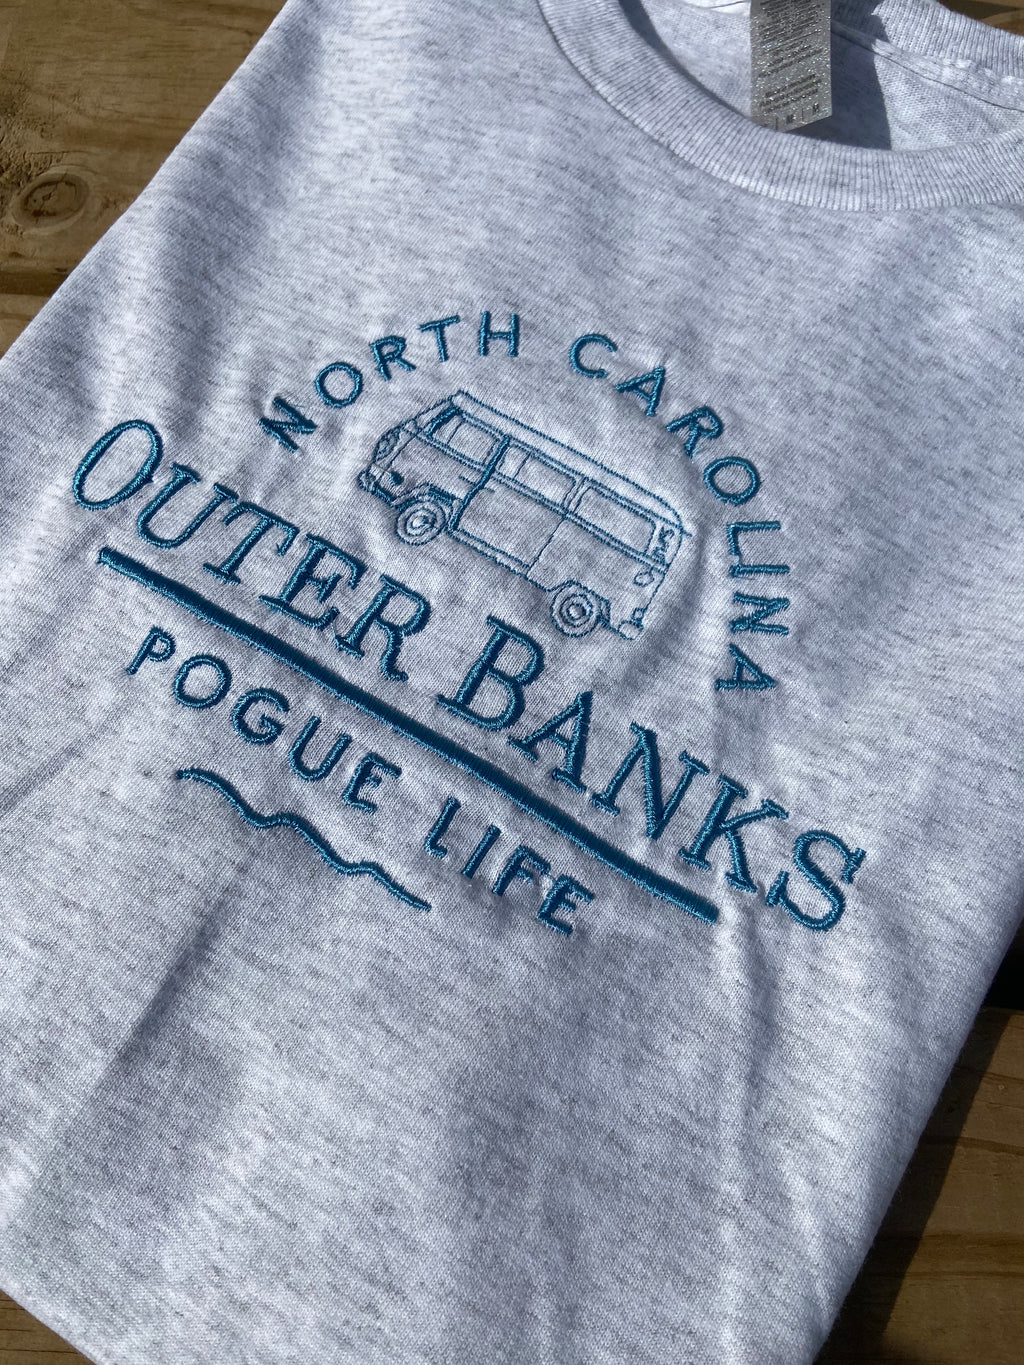 North Carolina outer banks Pogue life ash gray embroidered sea blue thread